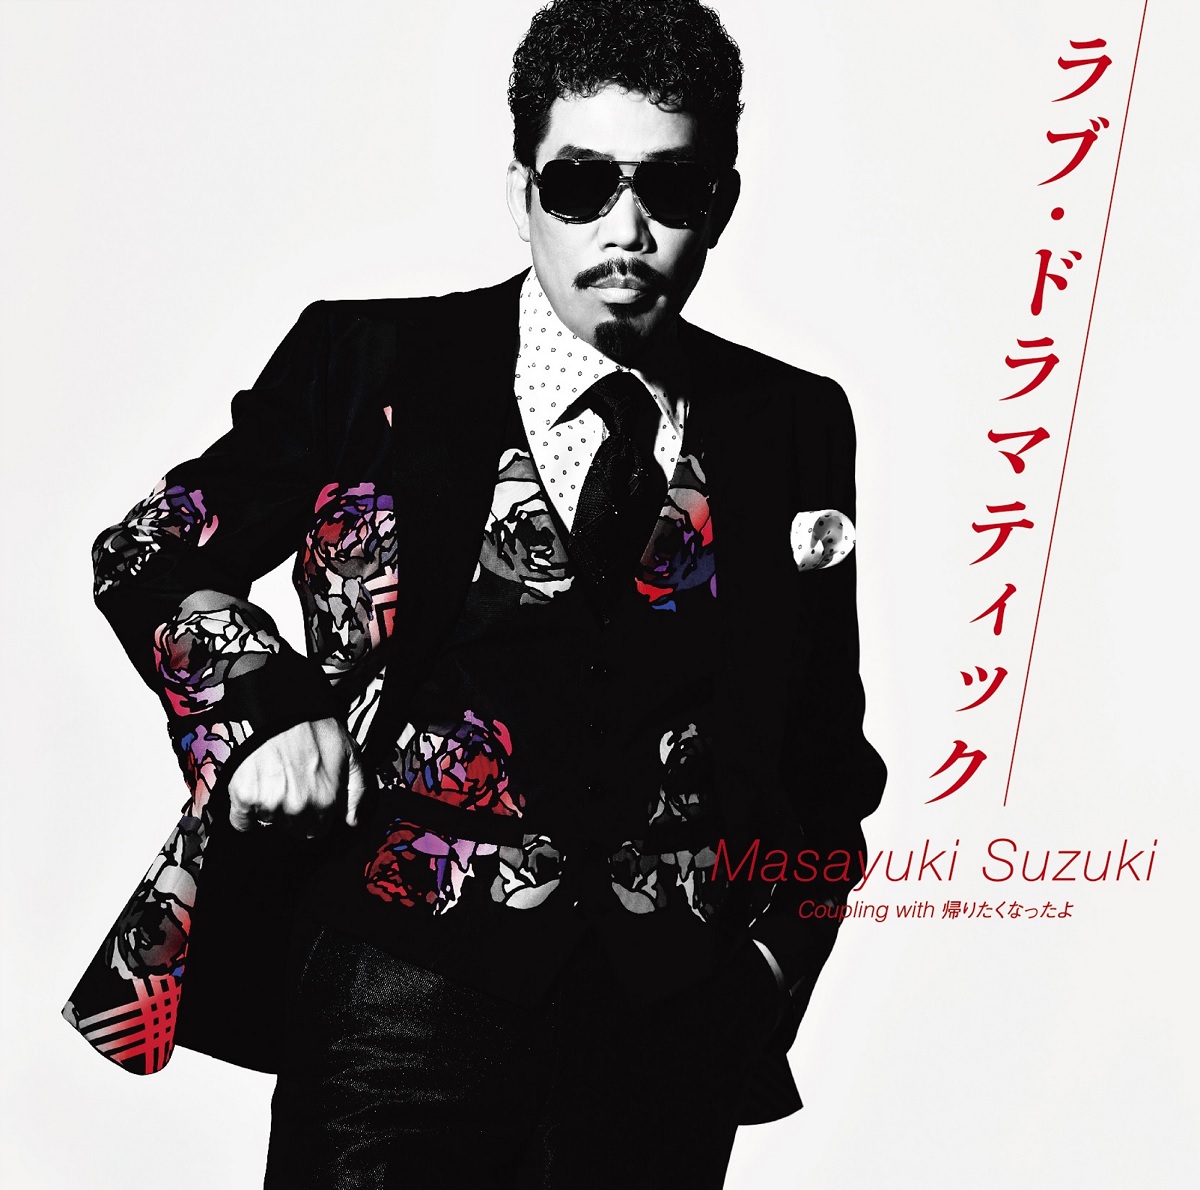 Cover art for『Masayuki Suzuki - ラブ・ドラマティック feat. 伊原六花』from the release『Love Dramatic feat. Rikka Ihara